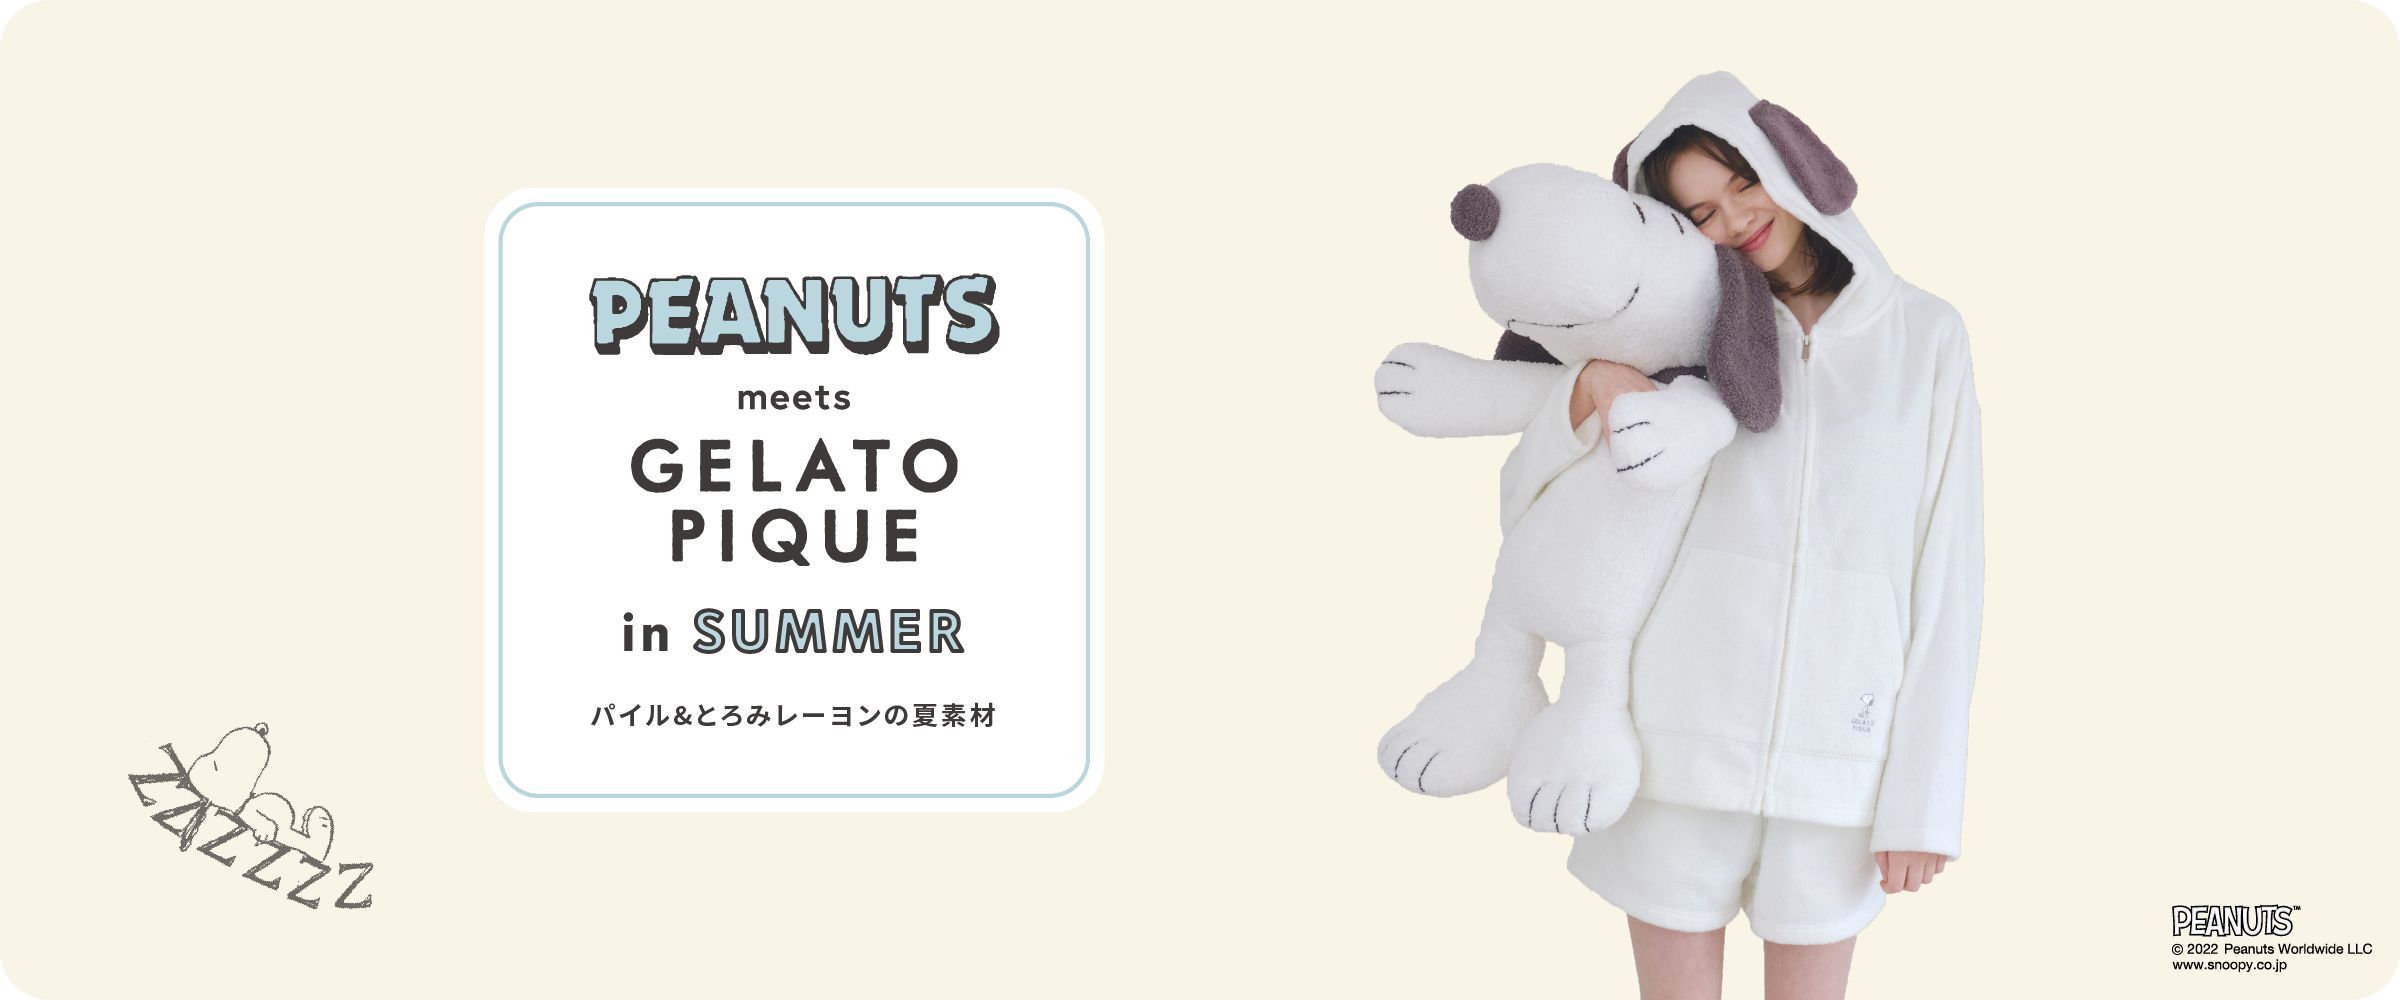 Peanuts meets Gelato Pique in summer, パイル&とろみレーヨンの夏素材